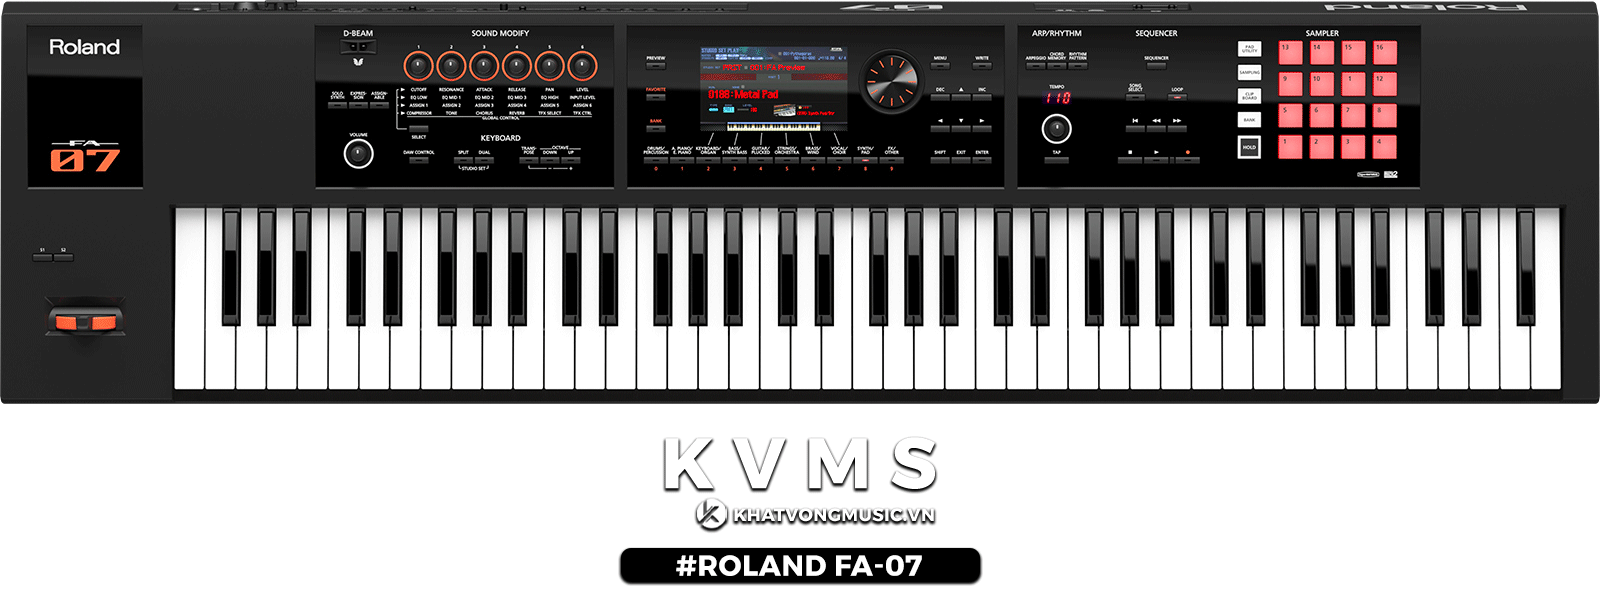 Roland FA-07 keyboard